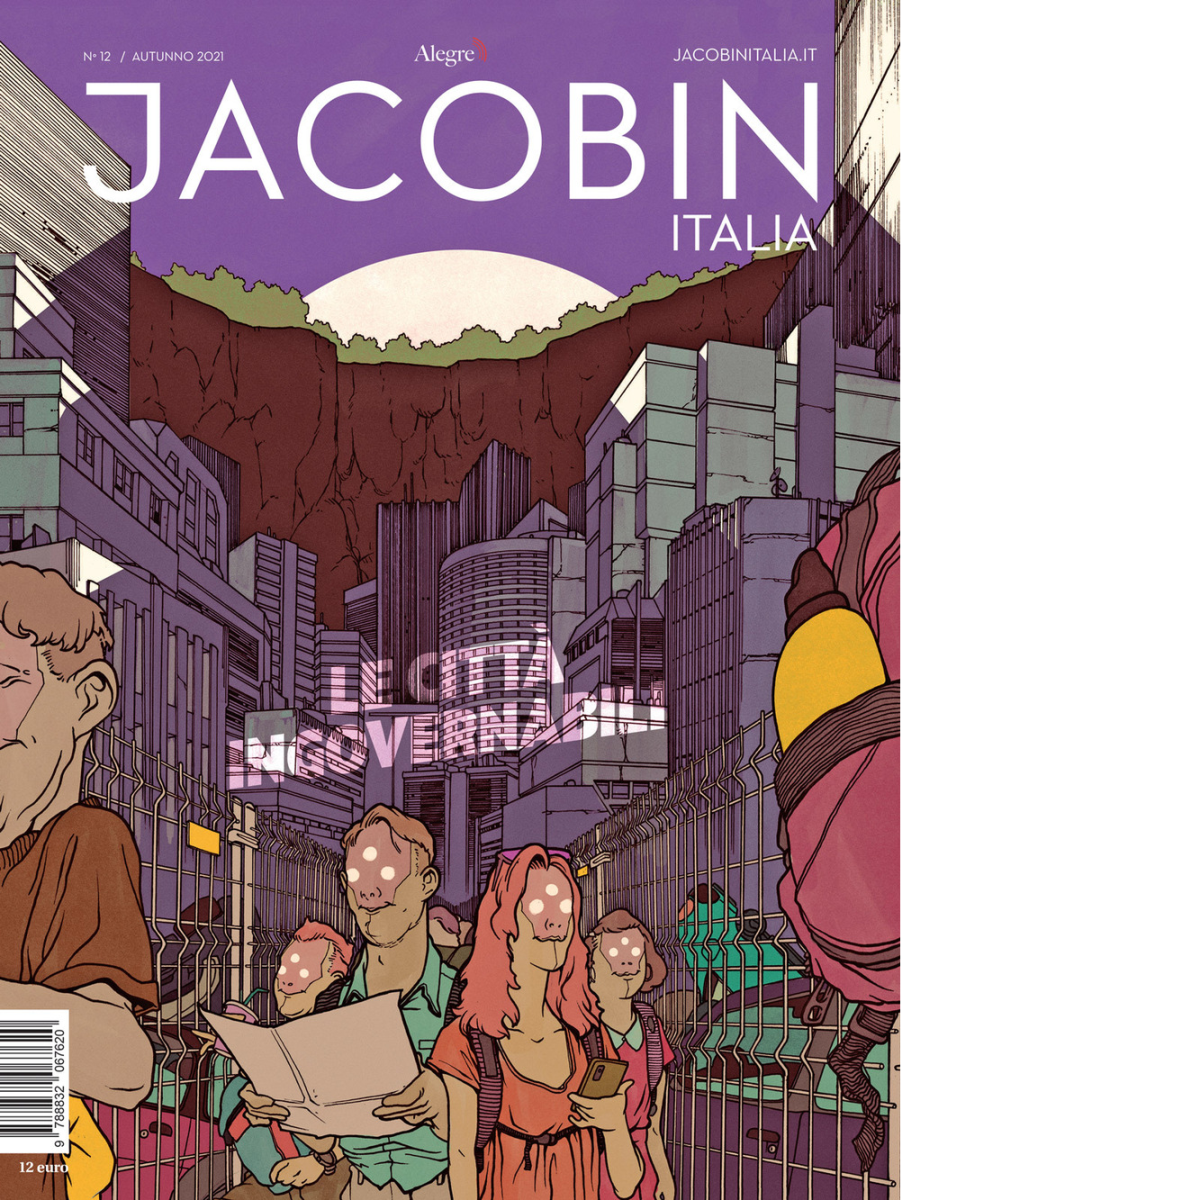 JACOBIN ITALIA n.12 - AA.VV. - Edizioni alegre, 2021